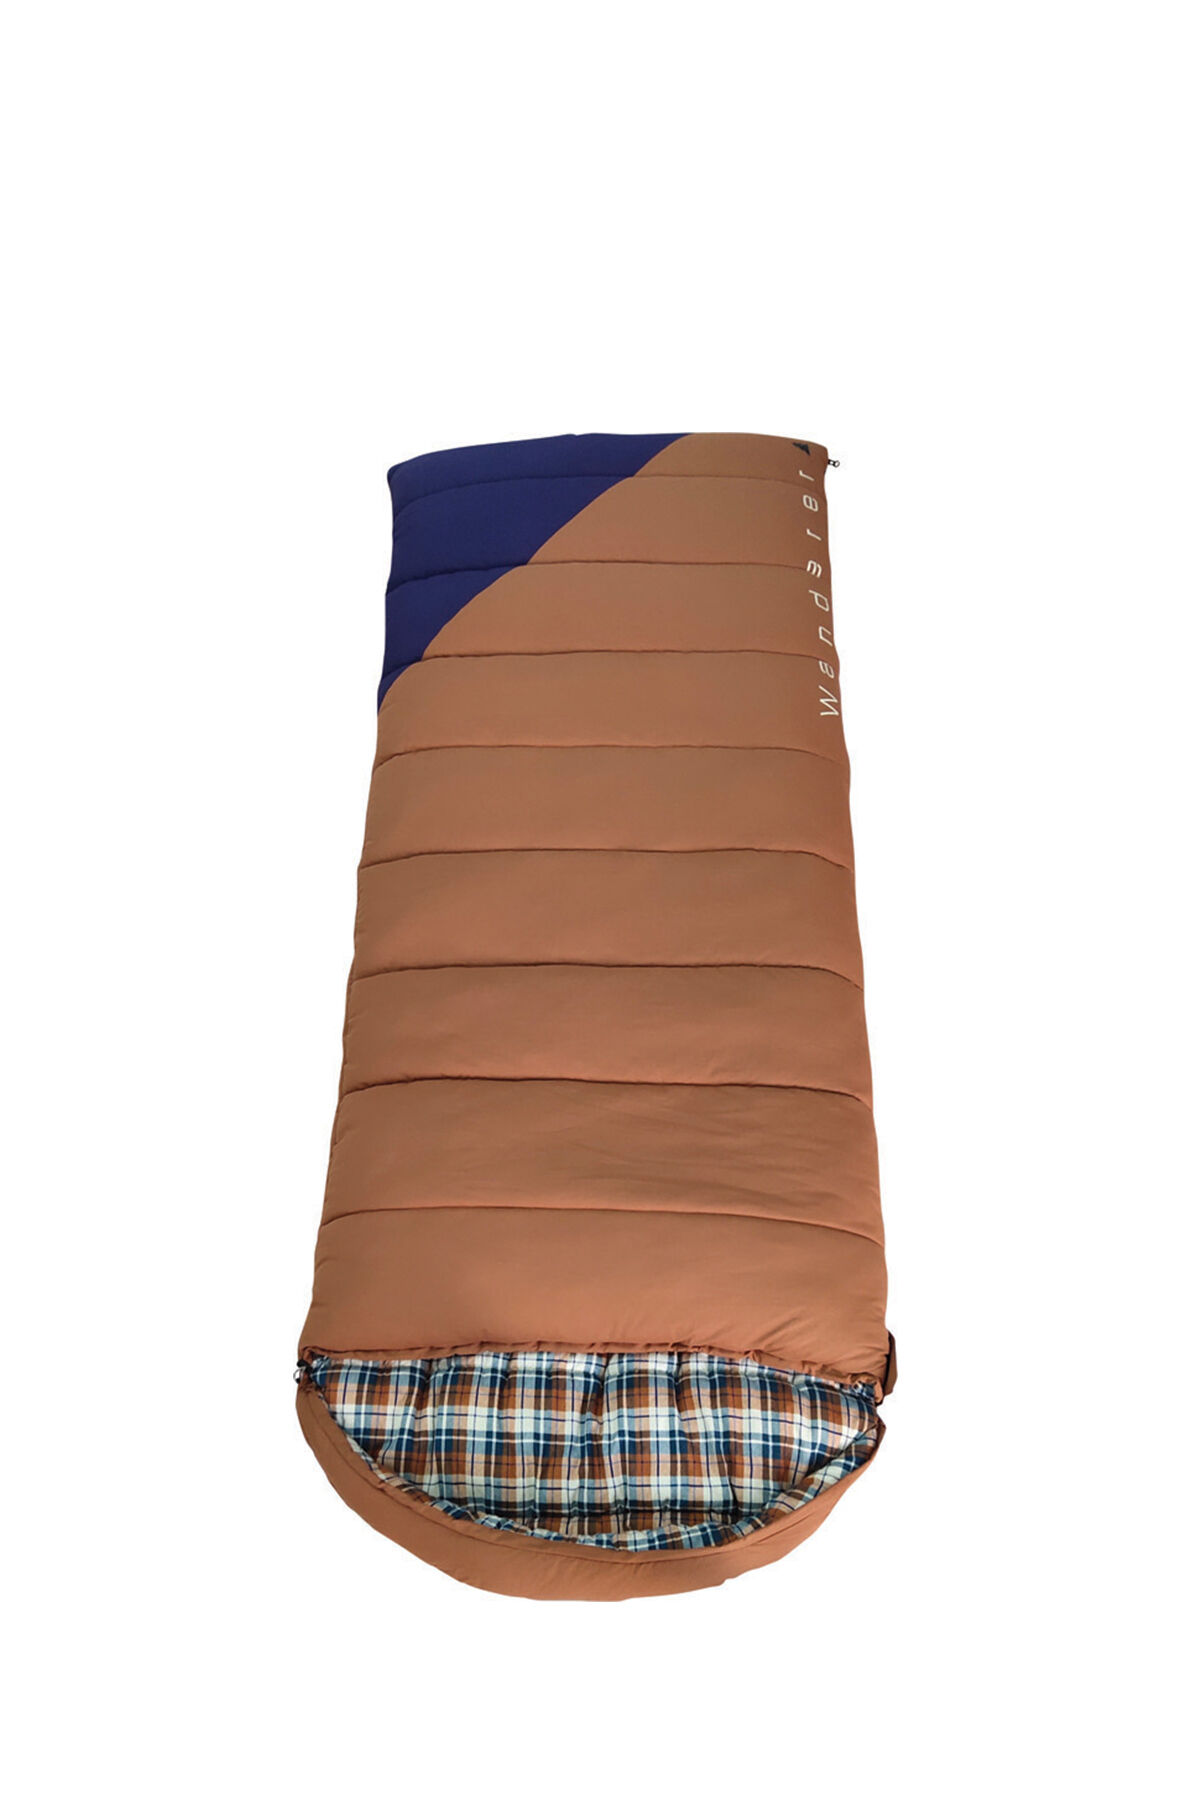 Marmot Sleeping Bag Guide  Ultralight Outdoor Gear